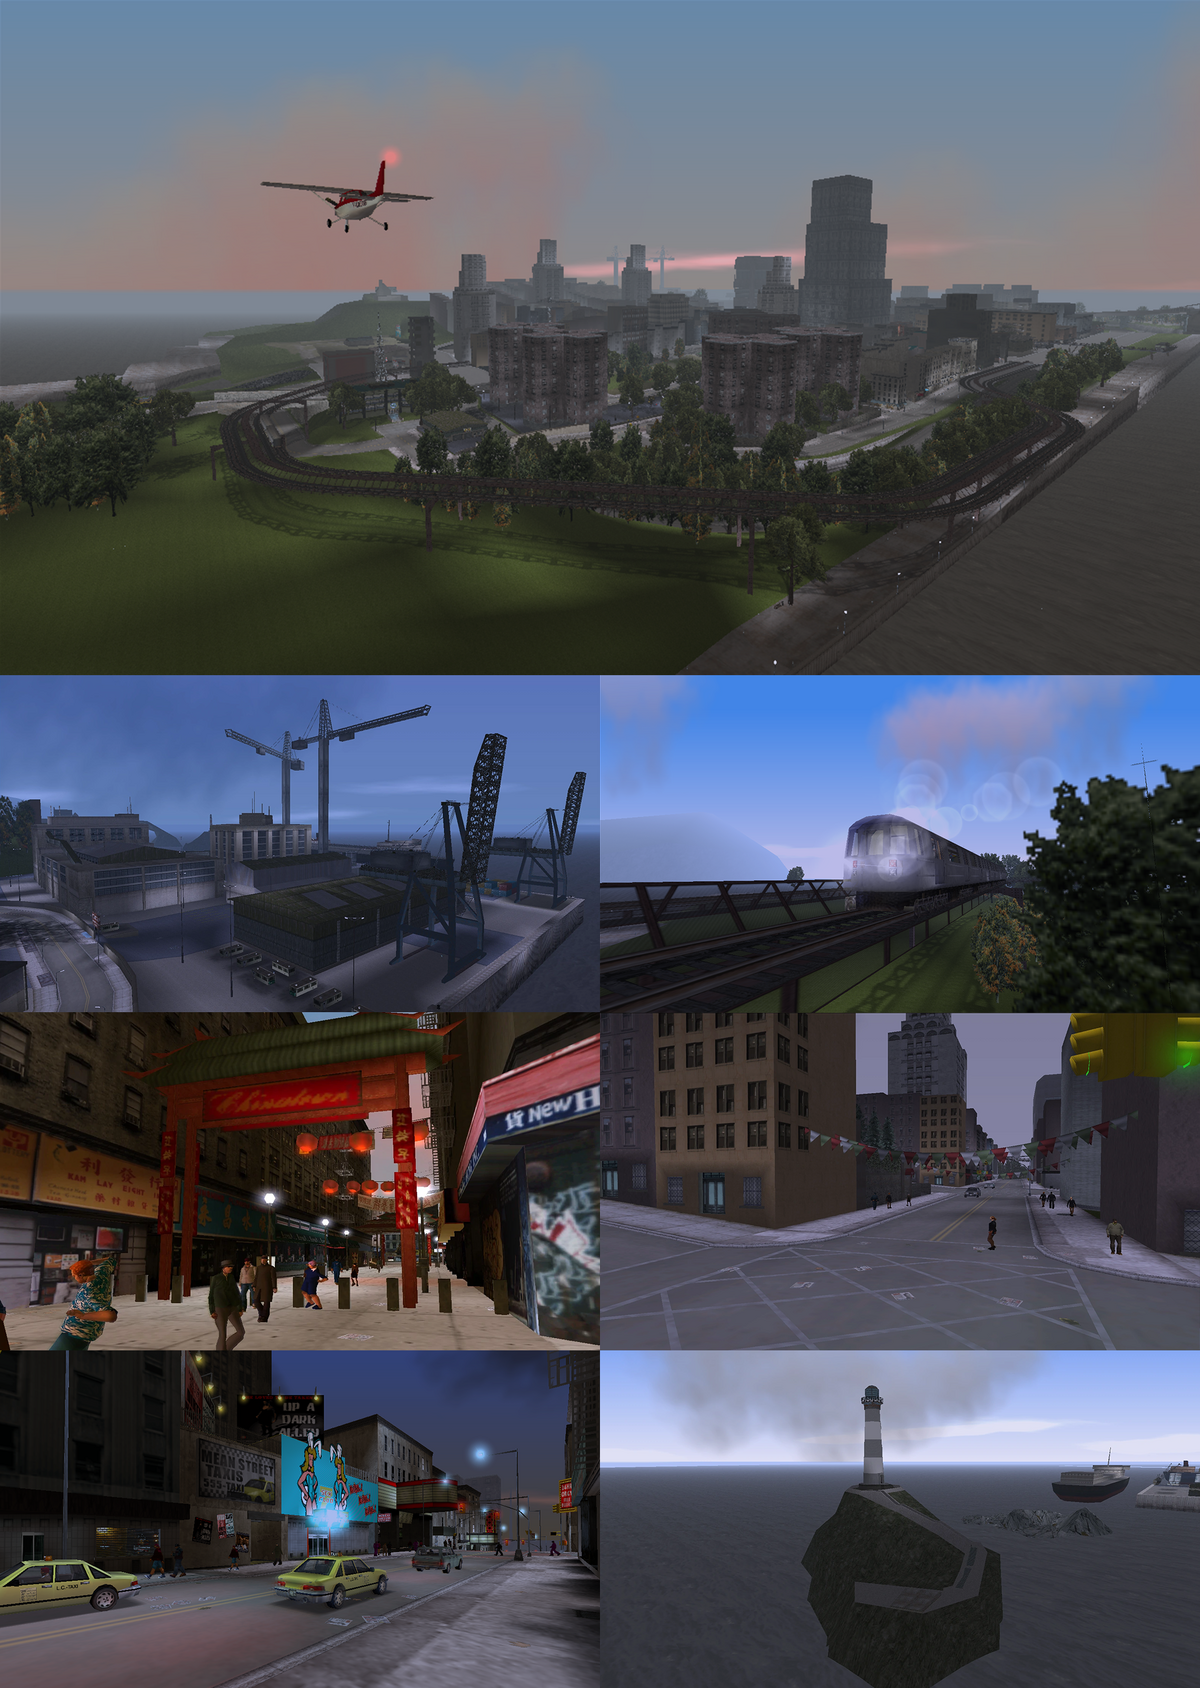 GTA 3 Xevengar's GTA 3 New interiors and locations (Portland) Mod 